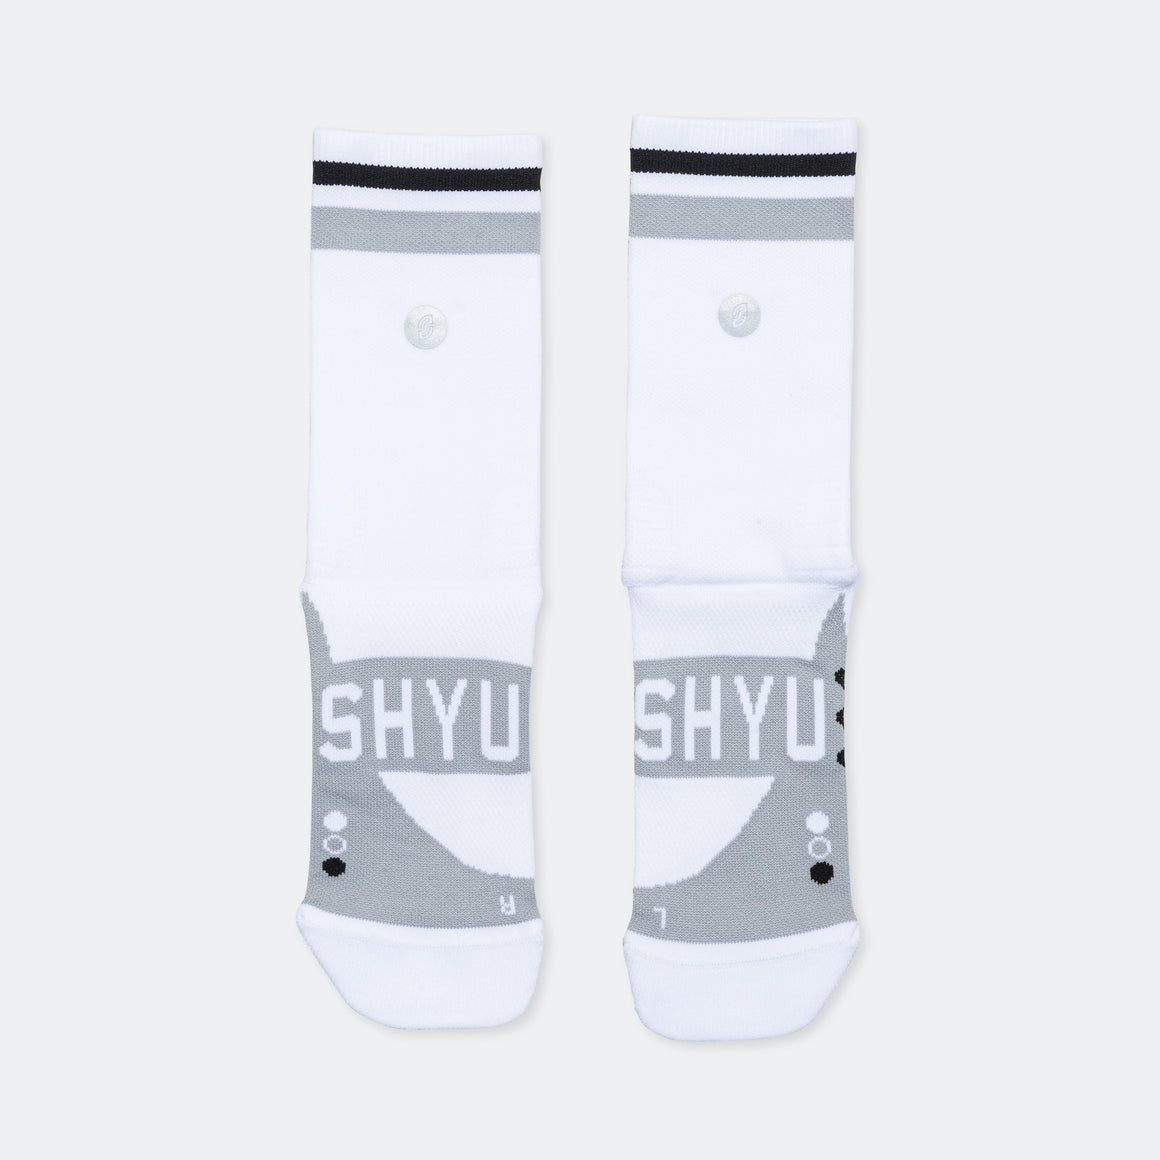 Shyu - Racing Socks - White/Grey/Black - Up There Athletics